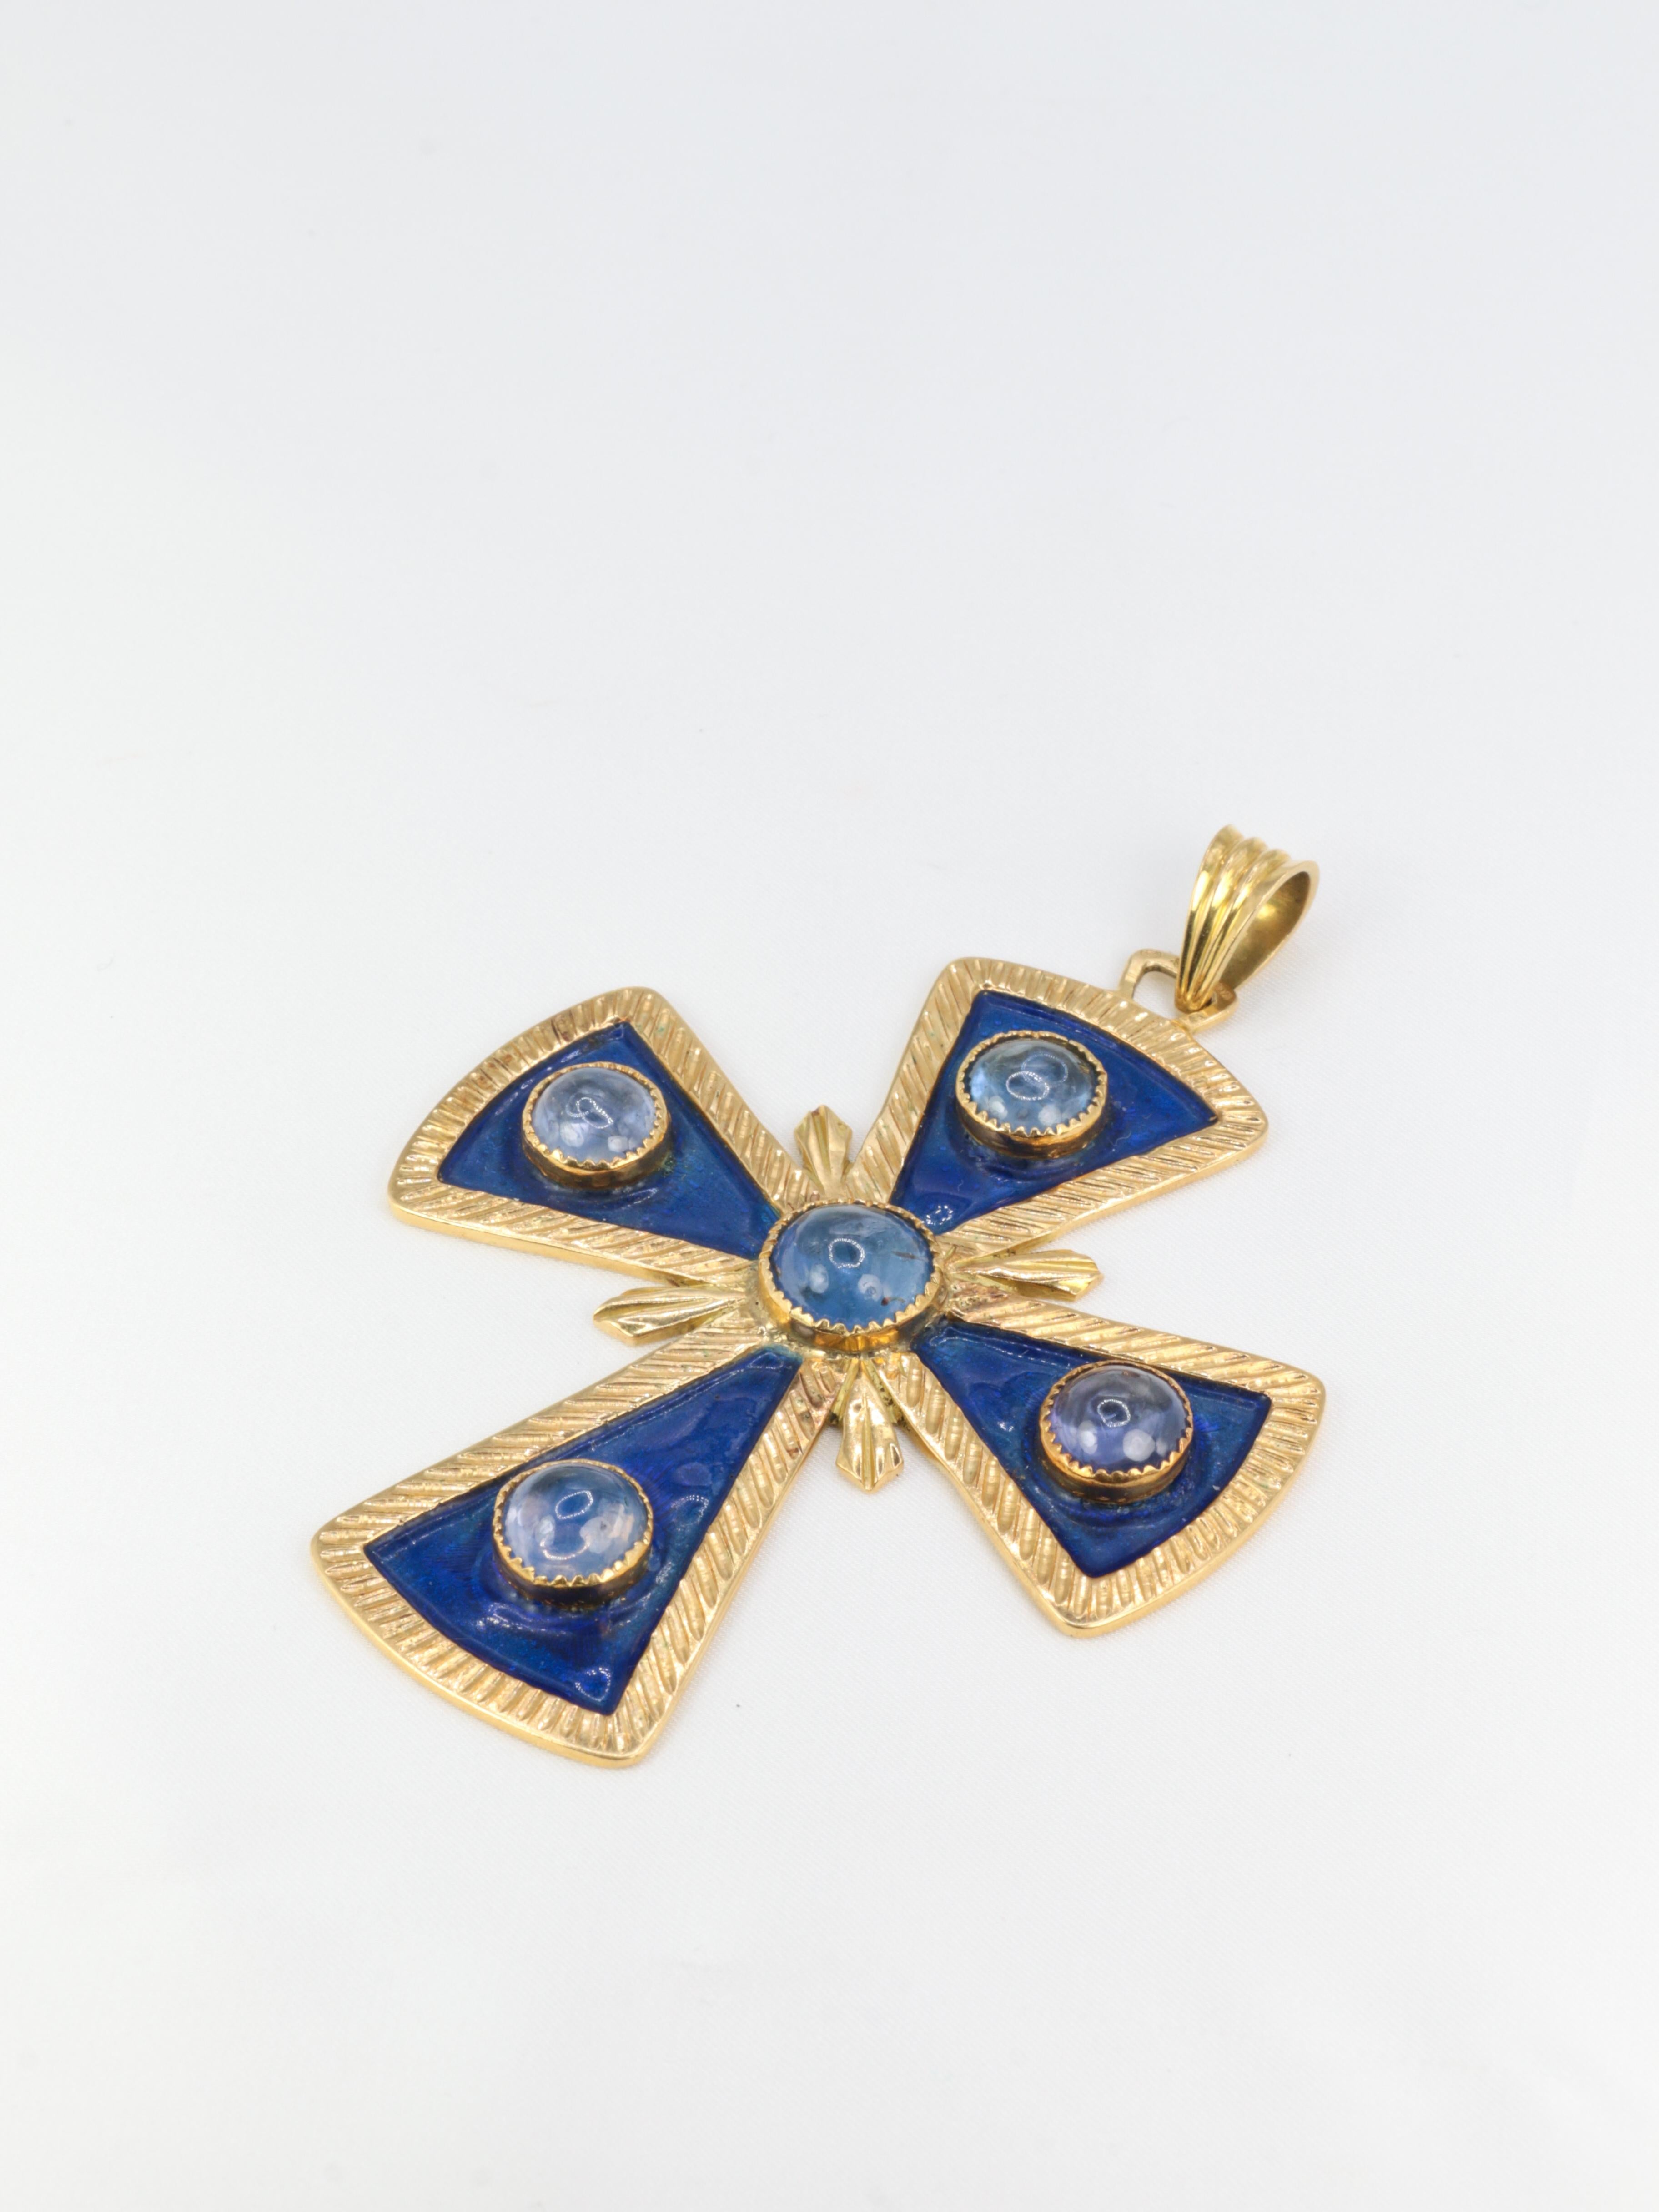 Vintage Gold, Enamel and Sapphire Pectoral Cross Pendant For Sale 1